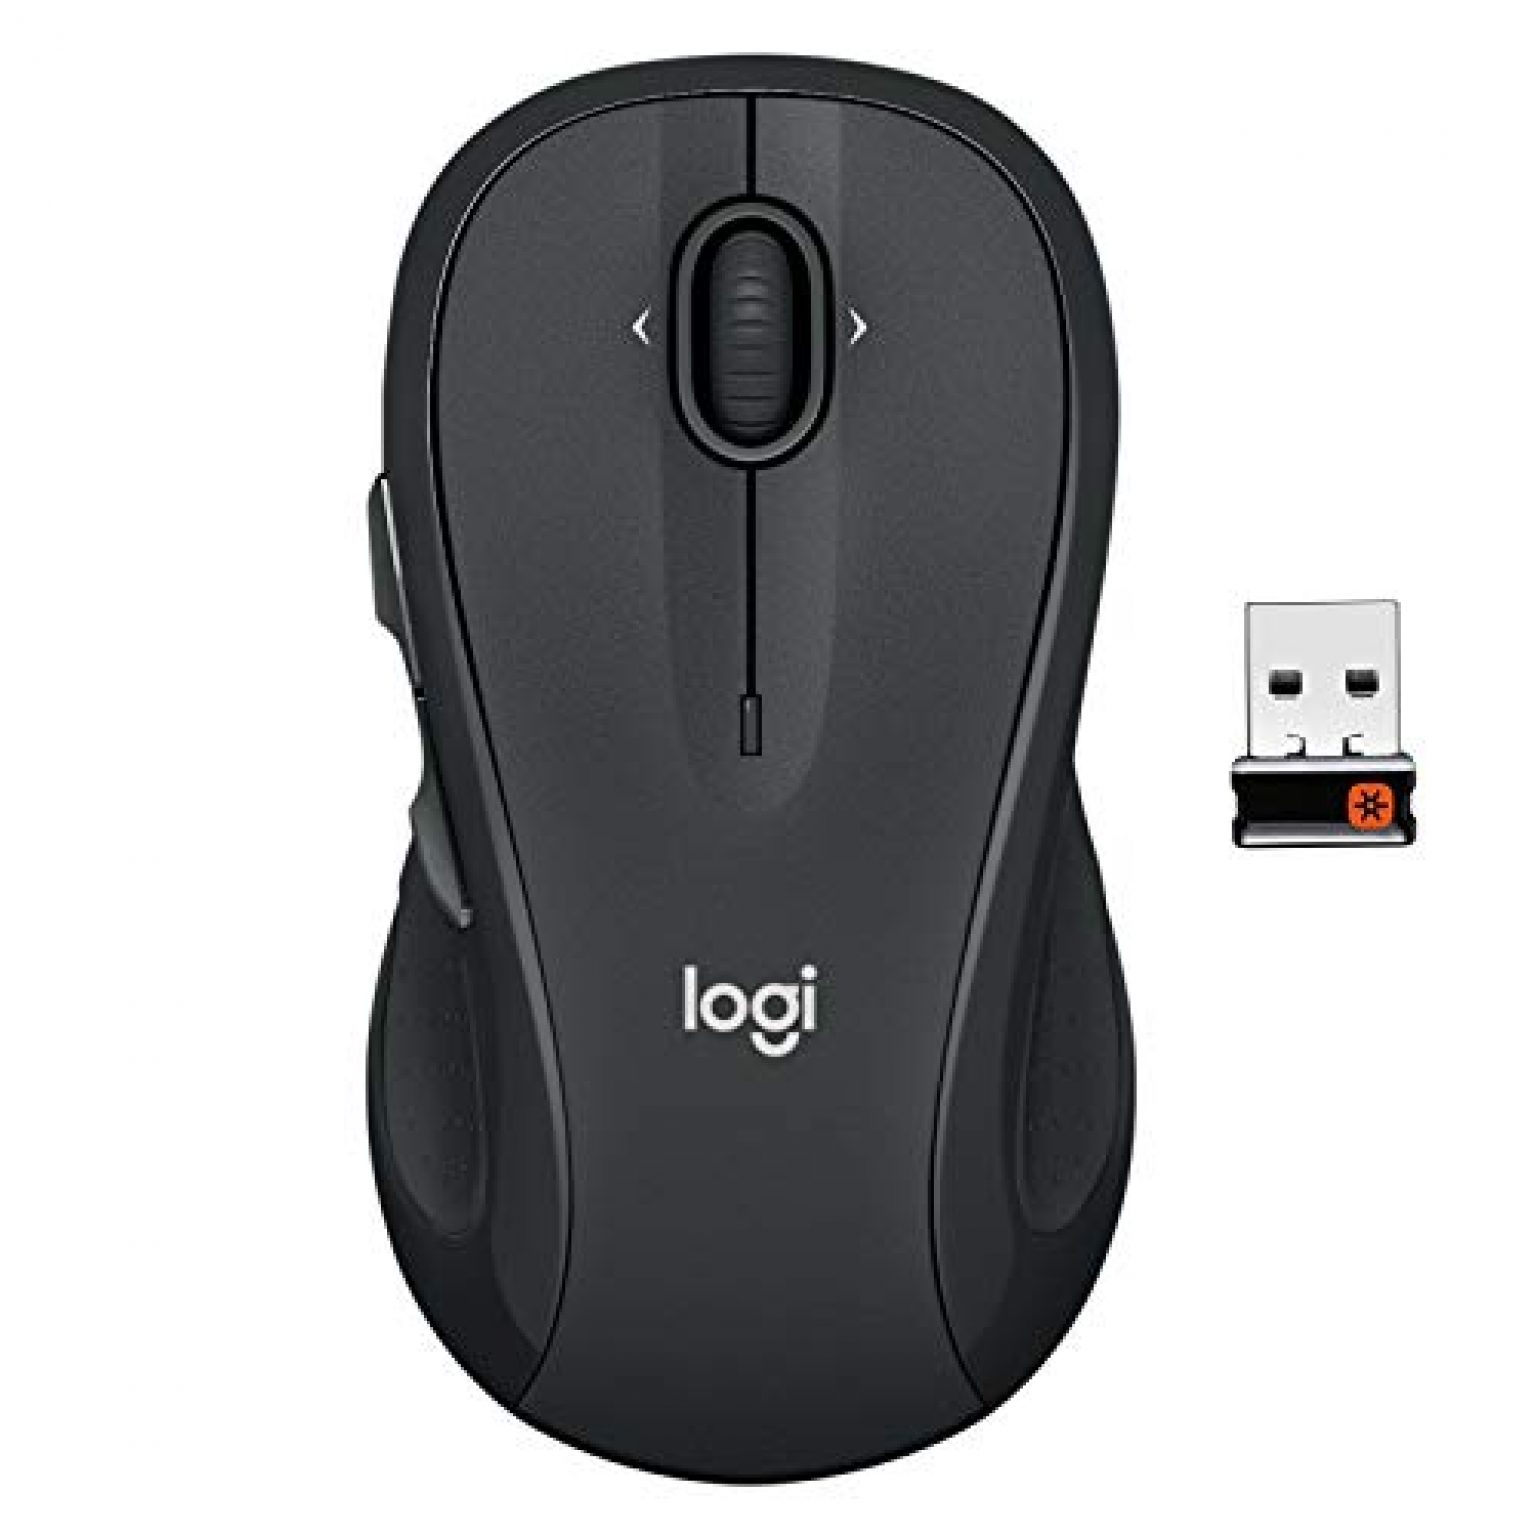 customizing the logitech mouse m510 with logitech options